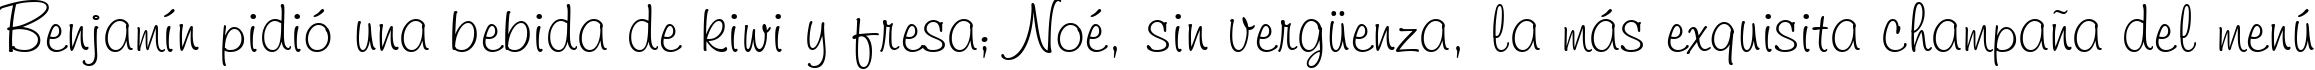 Пример написания шрифтом Freehand 591 BT текста на испанском